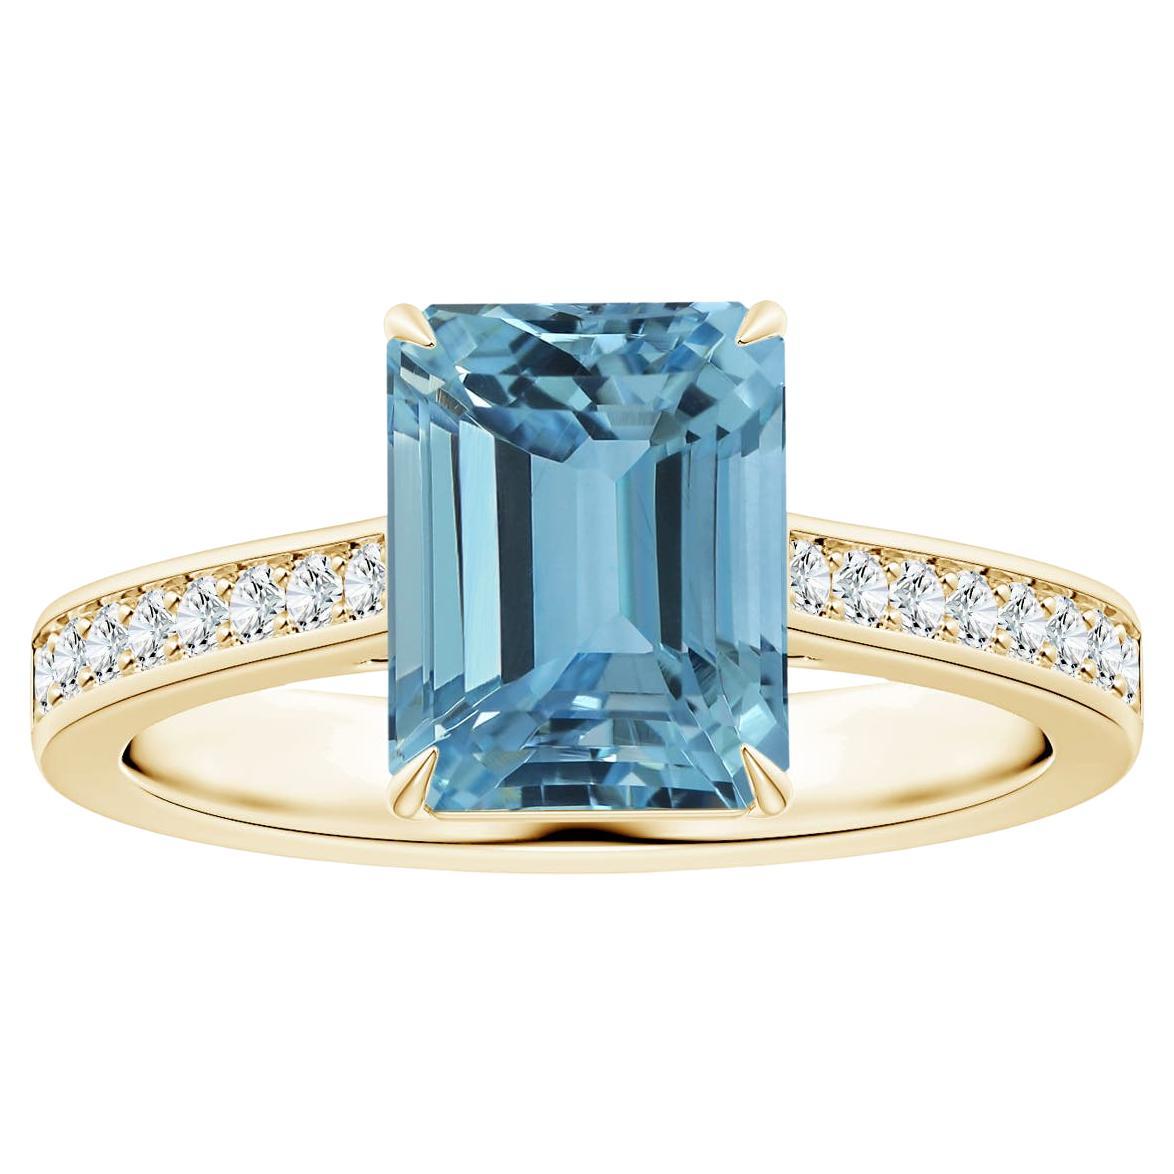 For Sale:  ANGARA GIA Certified Emerald-Cut Aquamarine Ring in Yellow Gold with Diamonds